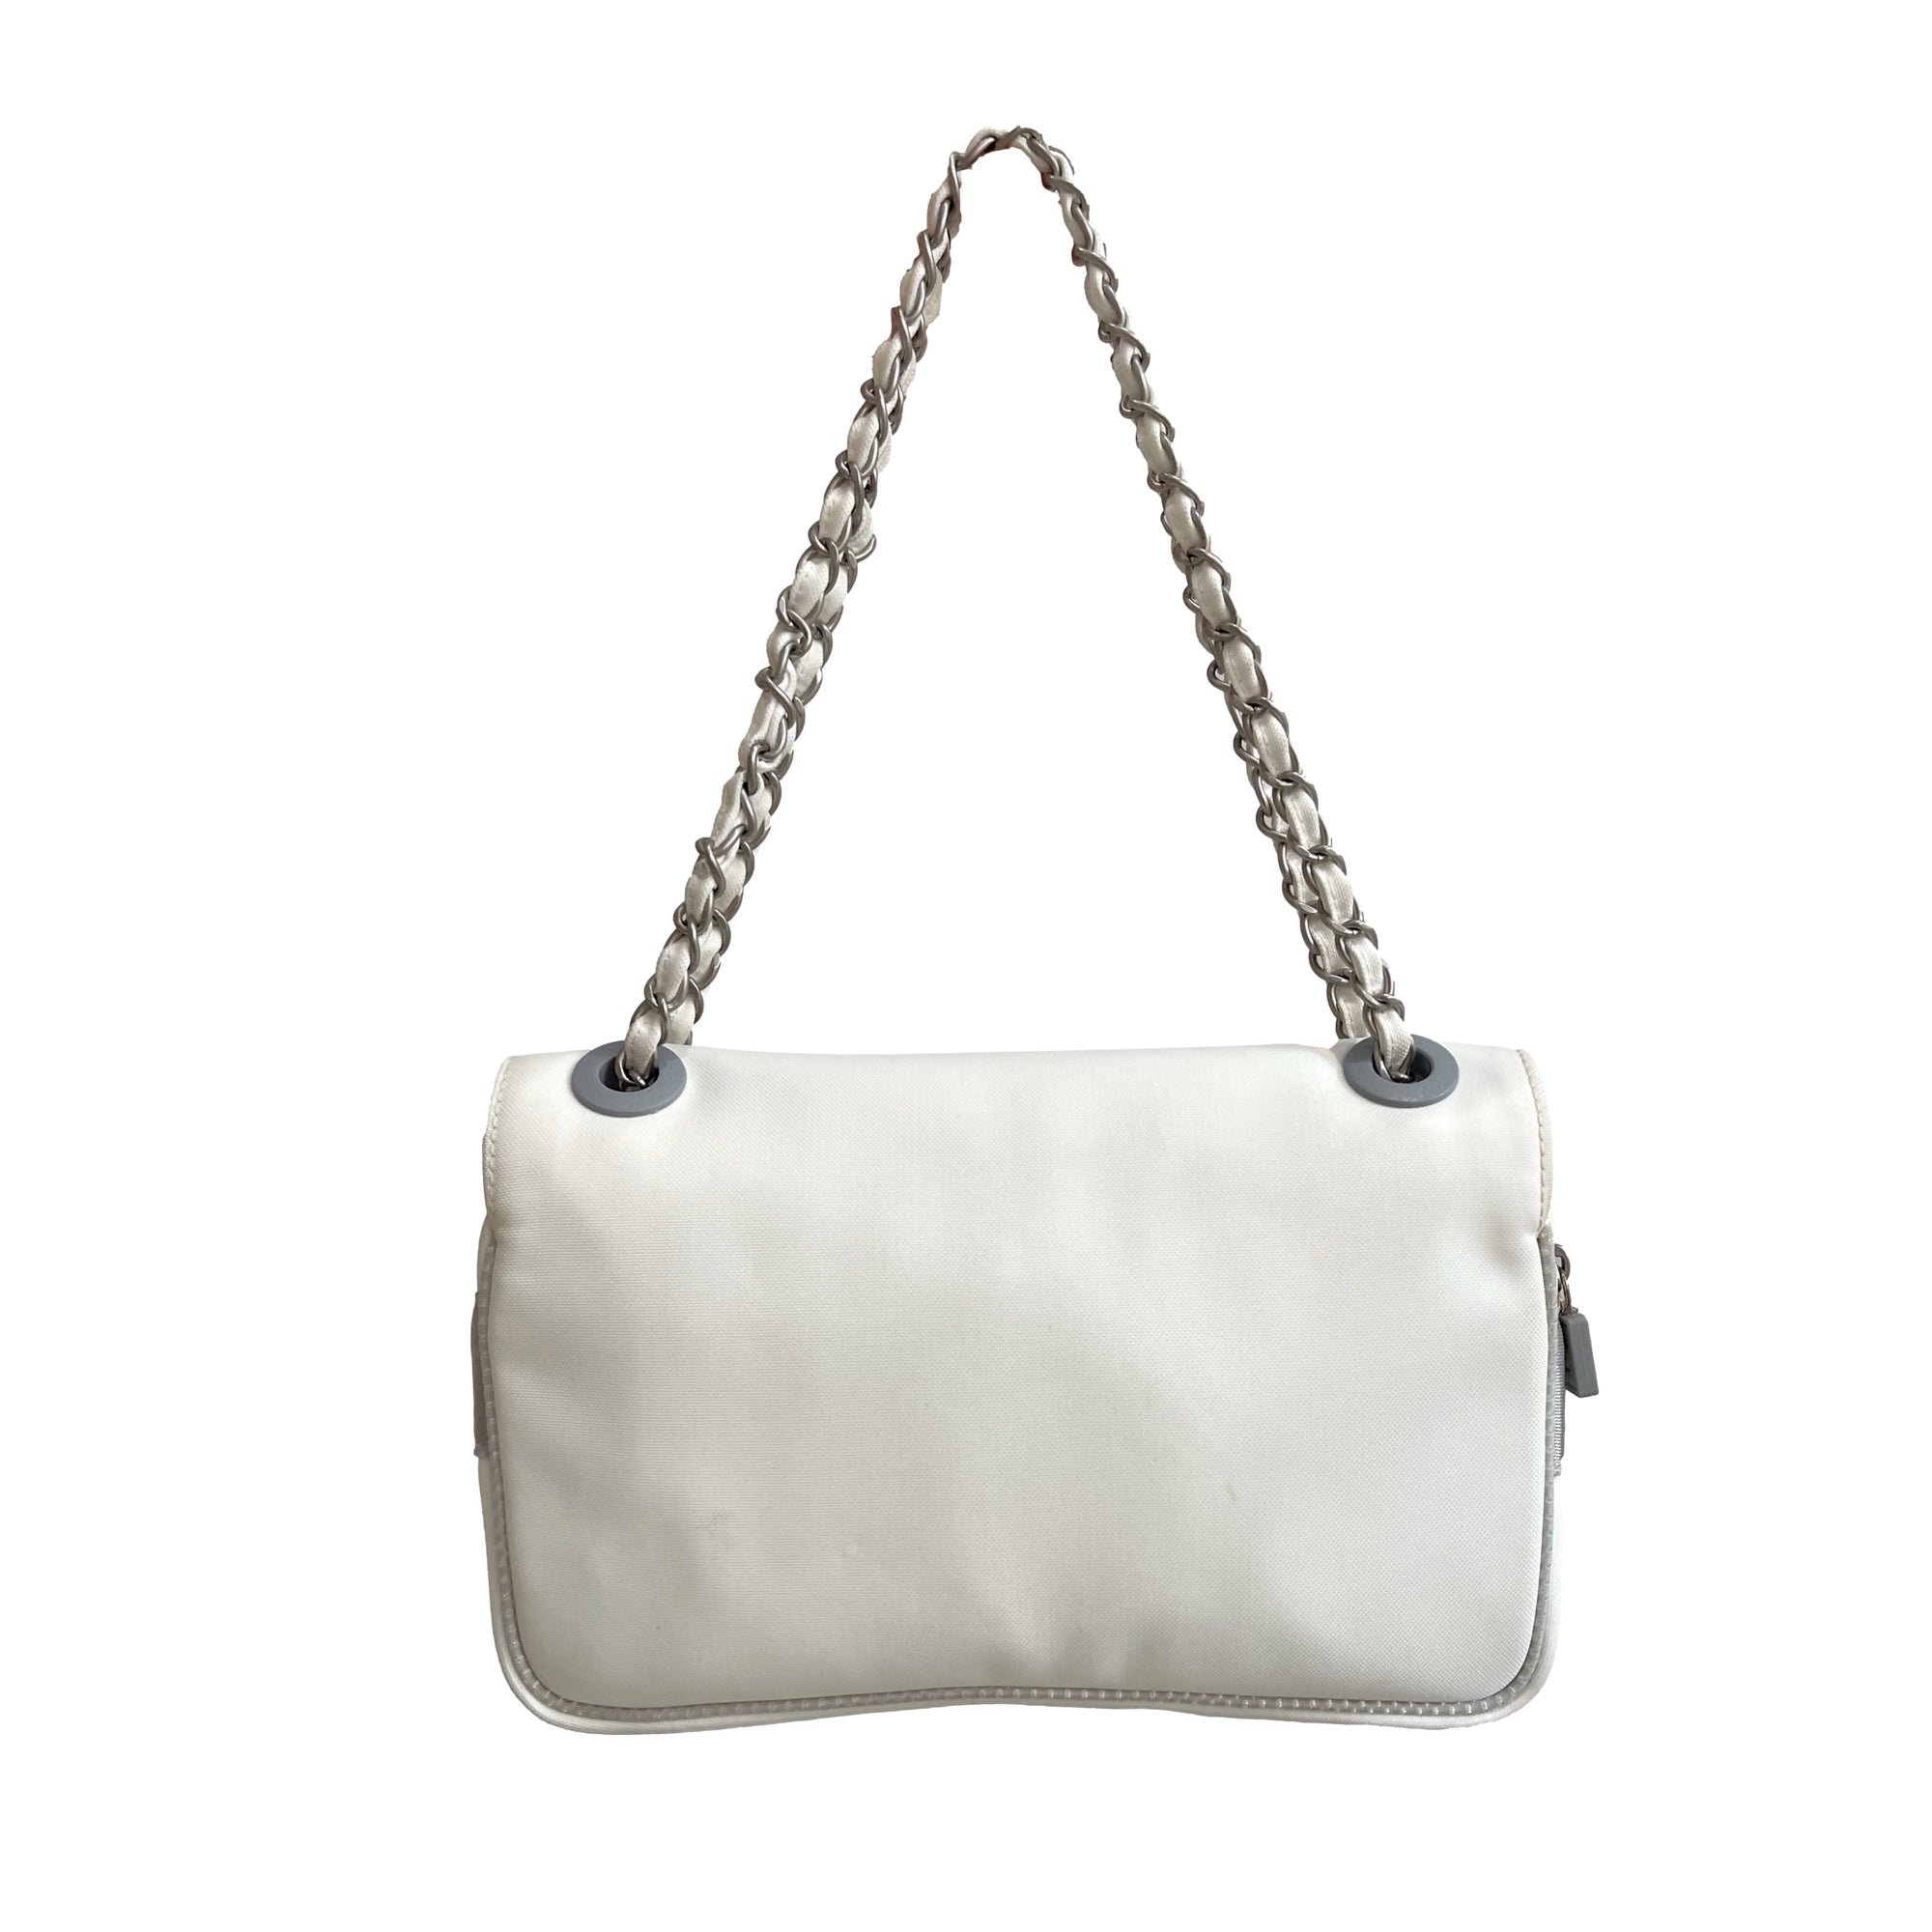 Chanel White Floral Print Bag - Handbags